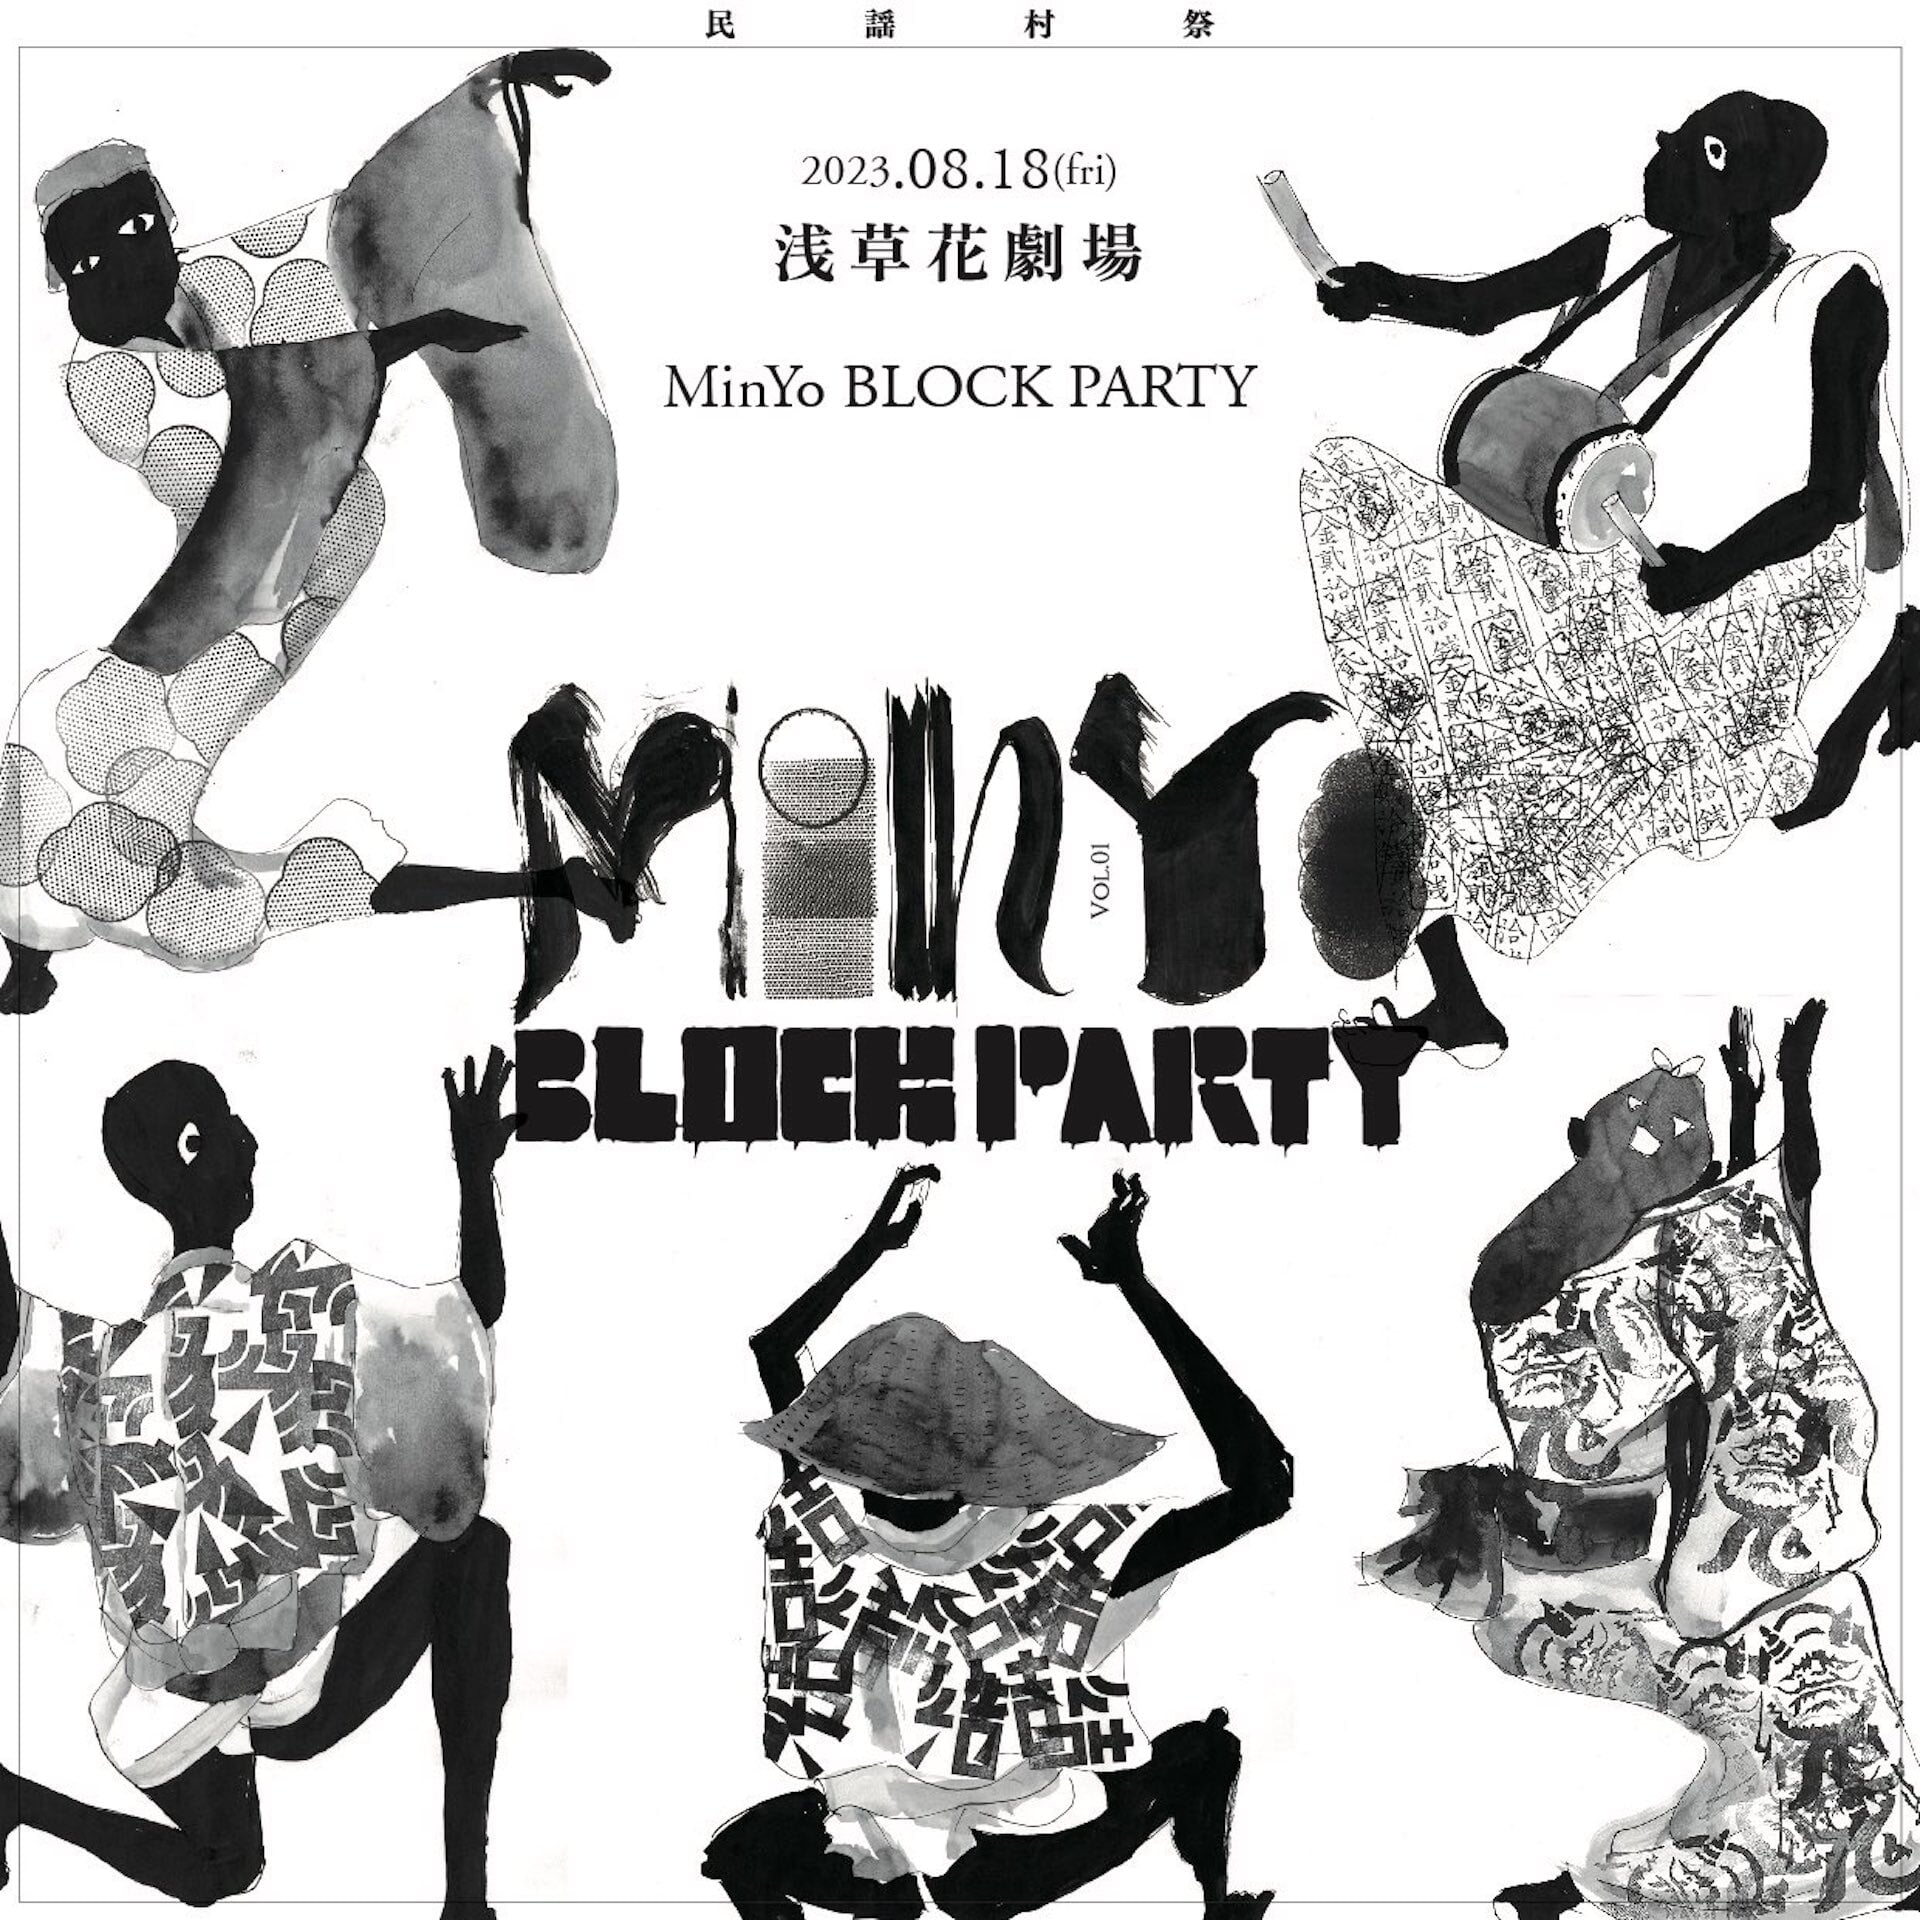 MinYo Block Party